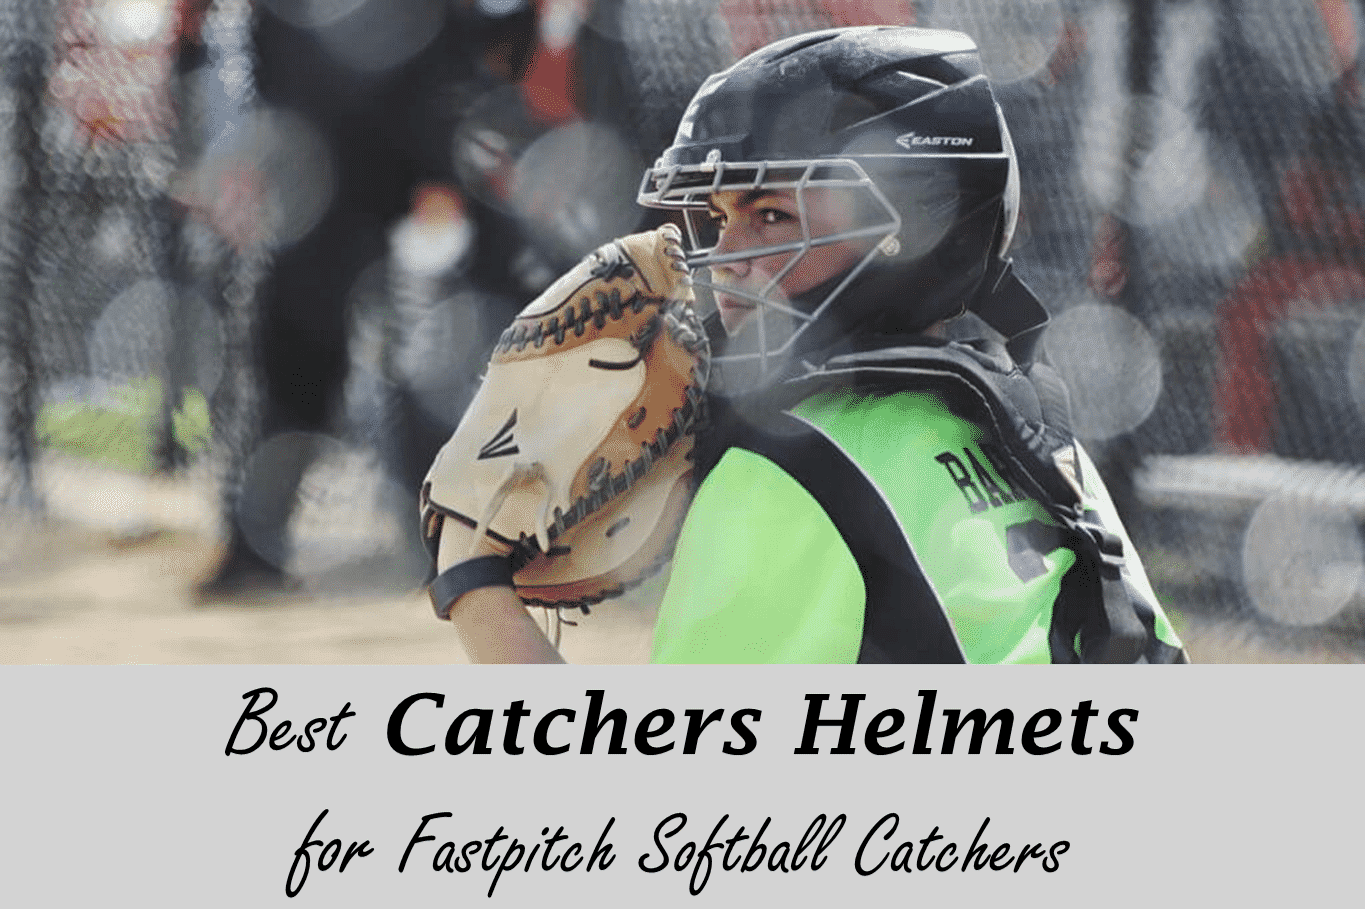 mizuno samurai catcher's helmet